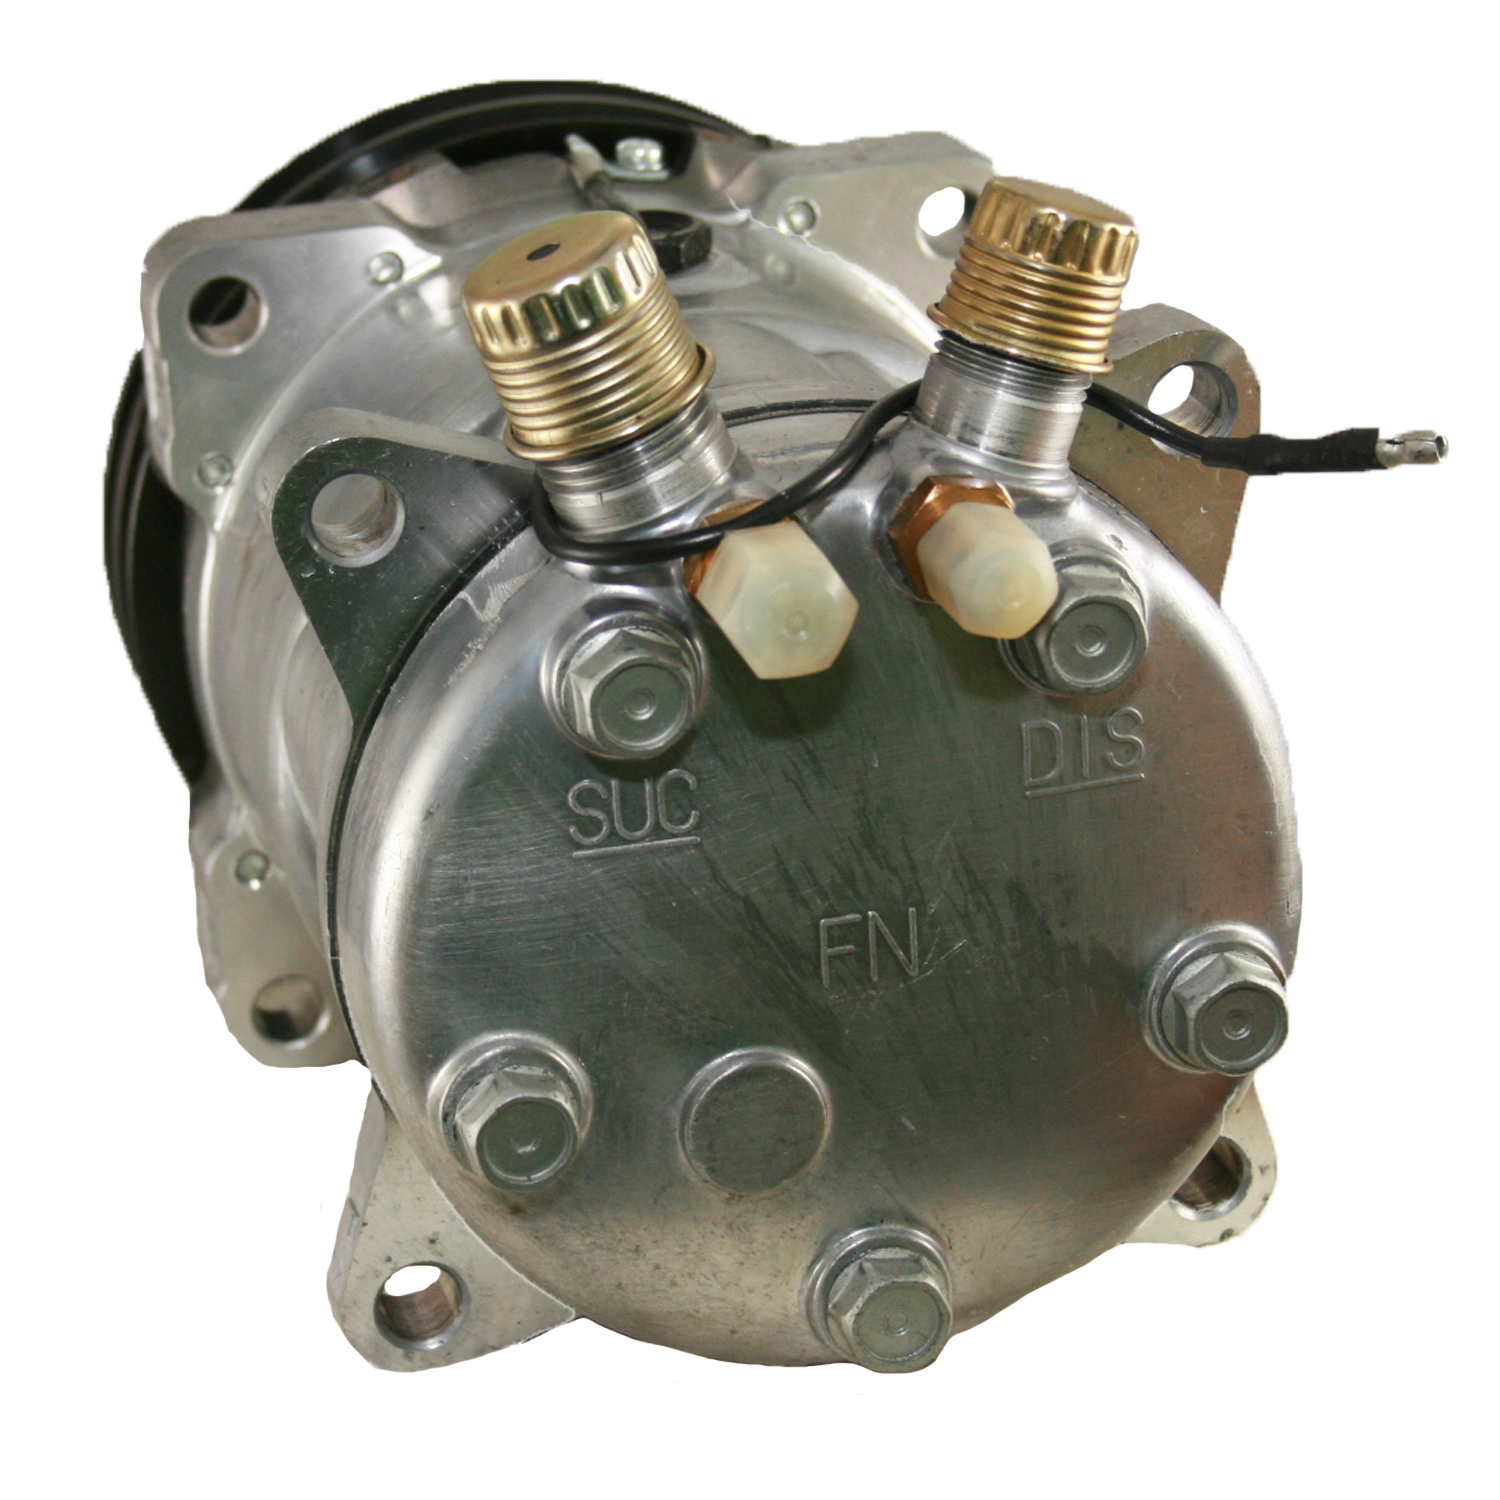 TCW Compressor 40101.201NEW New Product Image field_60b6a13a6e67c